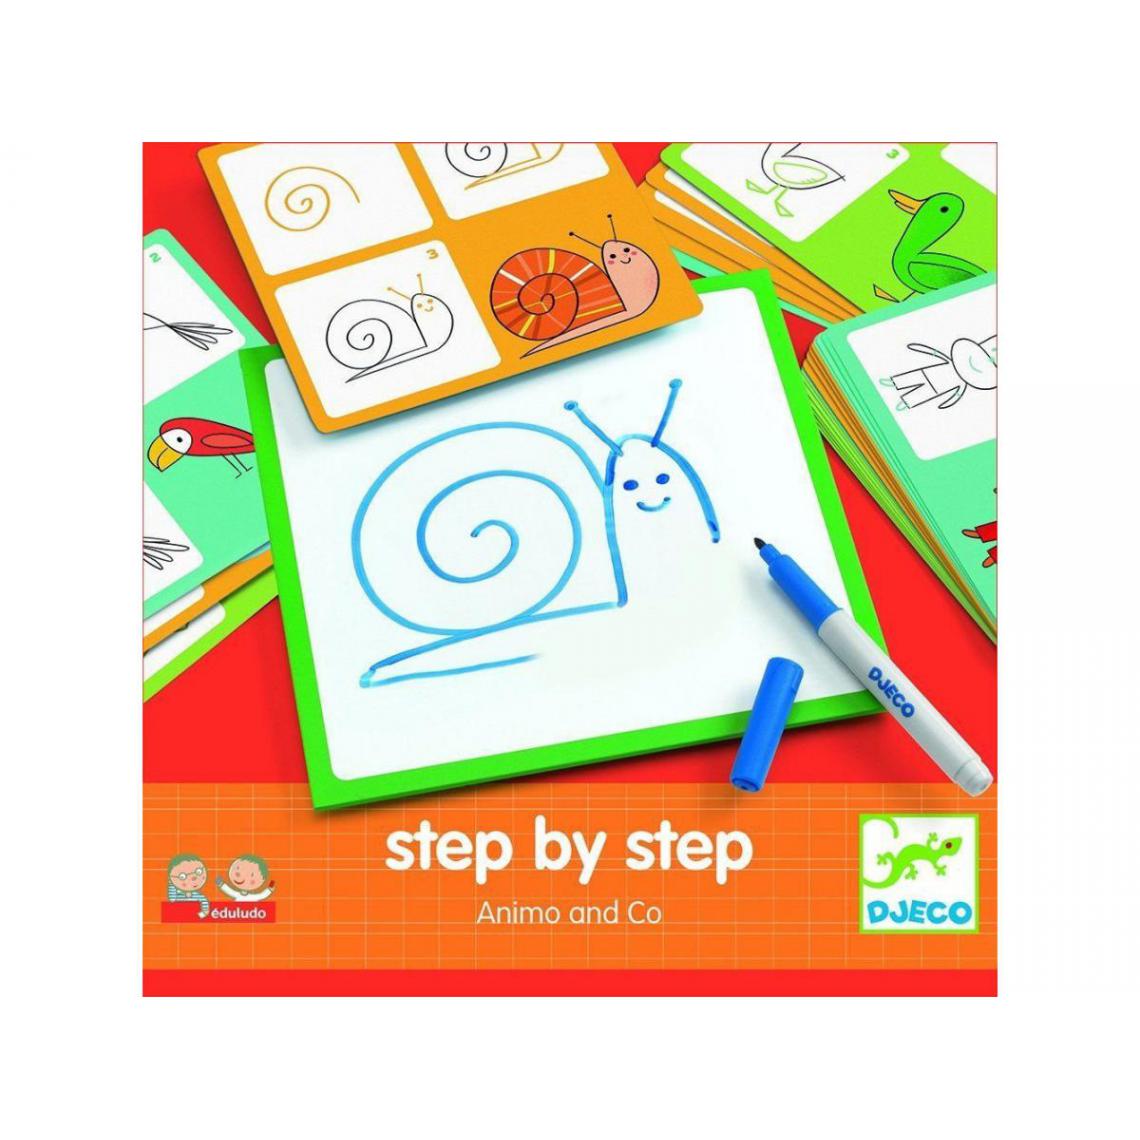 Djeco - Djeco - Step by step Animo and Co - Jeux éducatifs